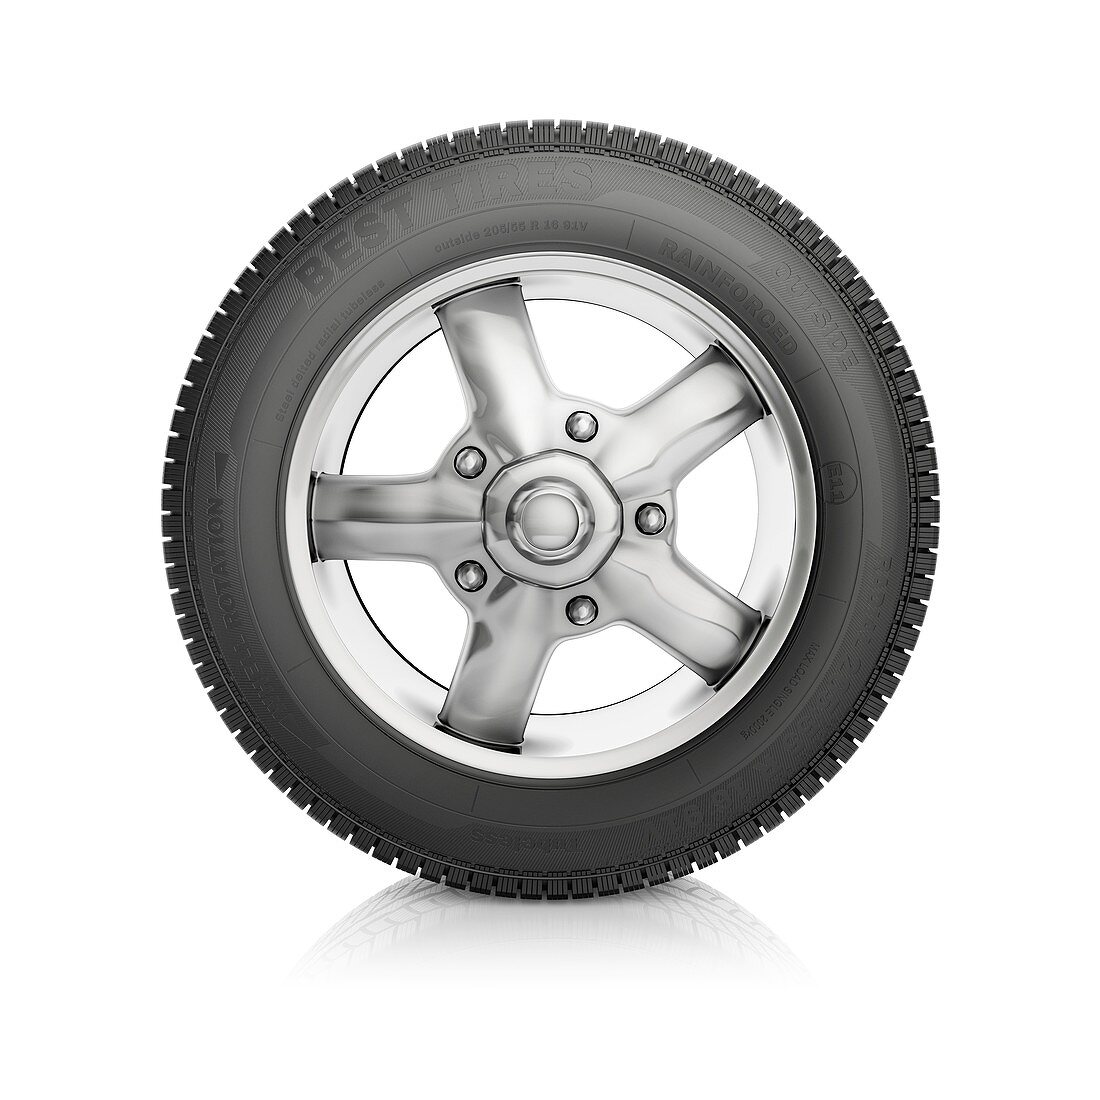 Car wheel, illustration